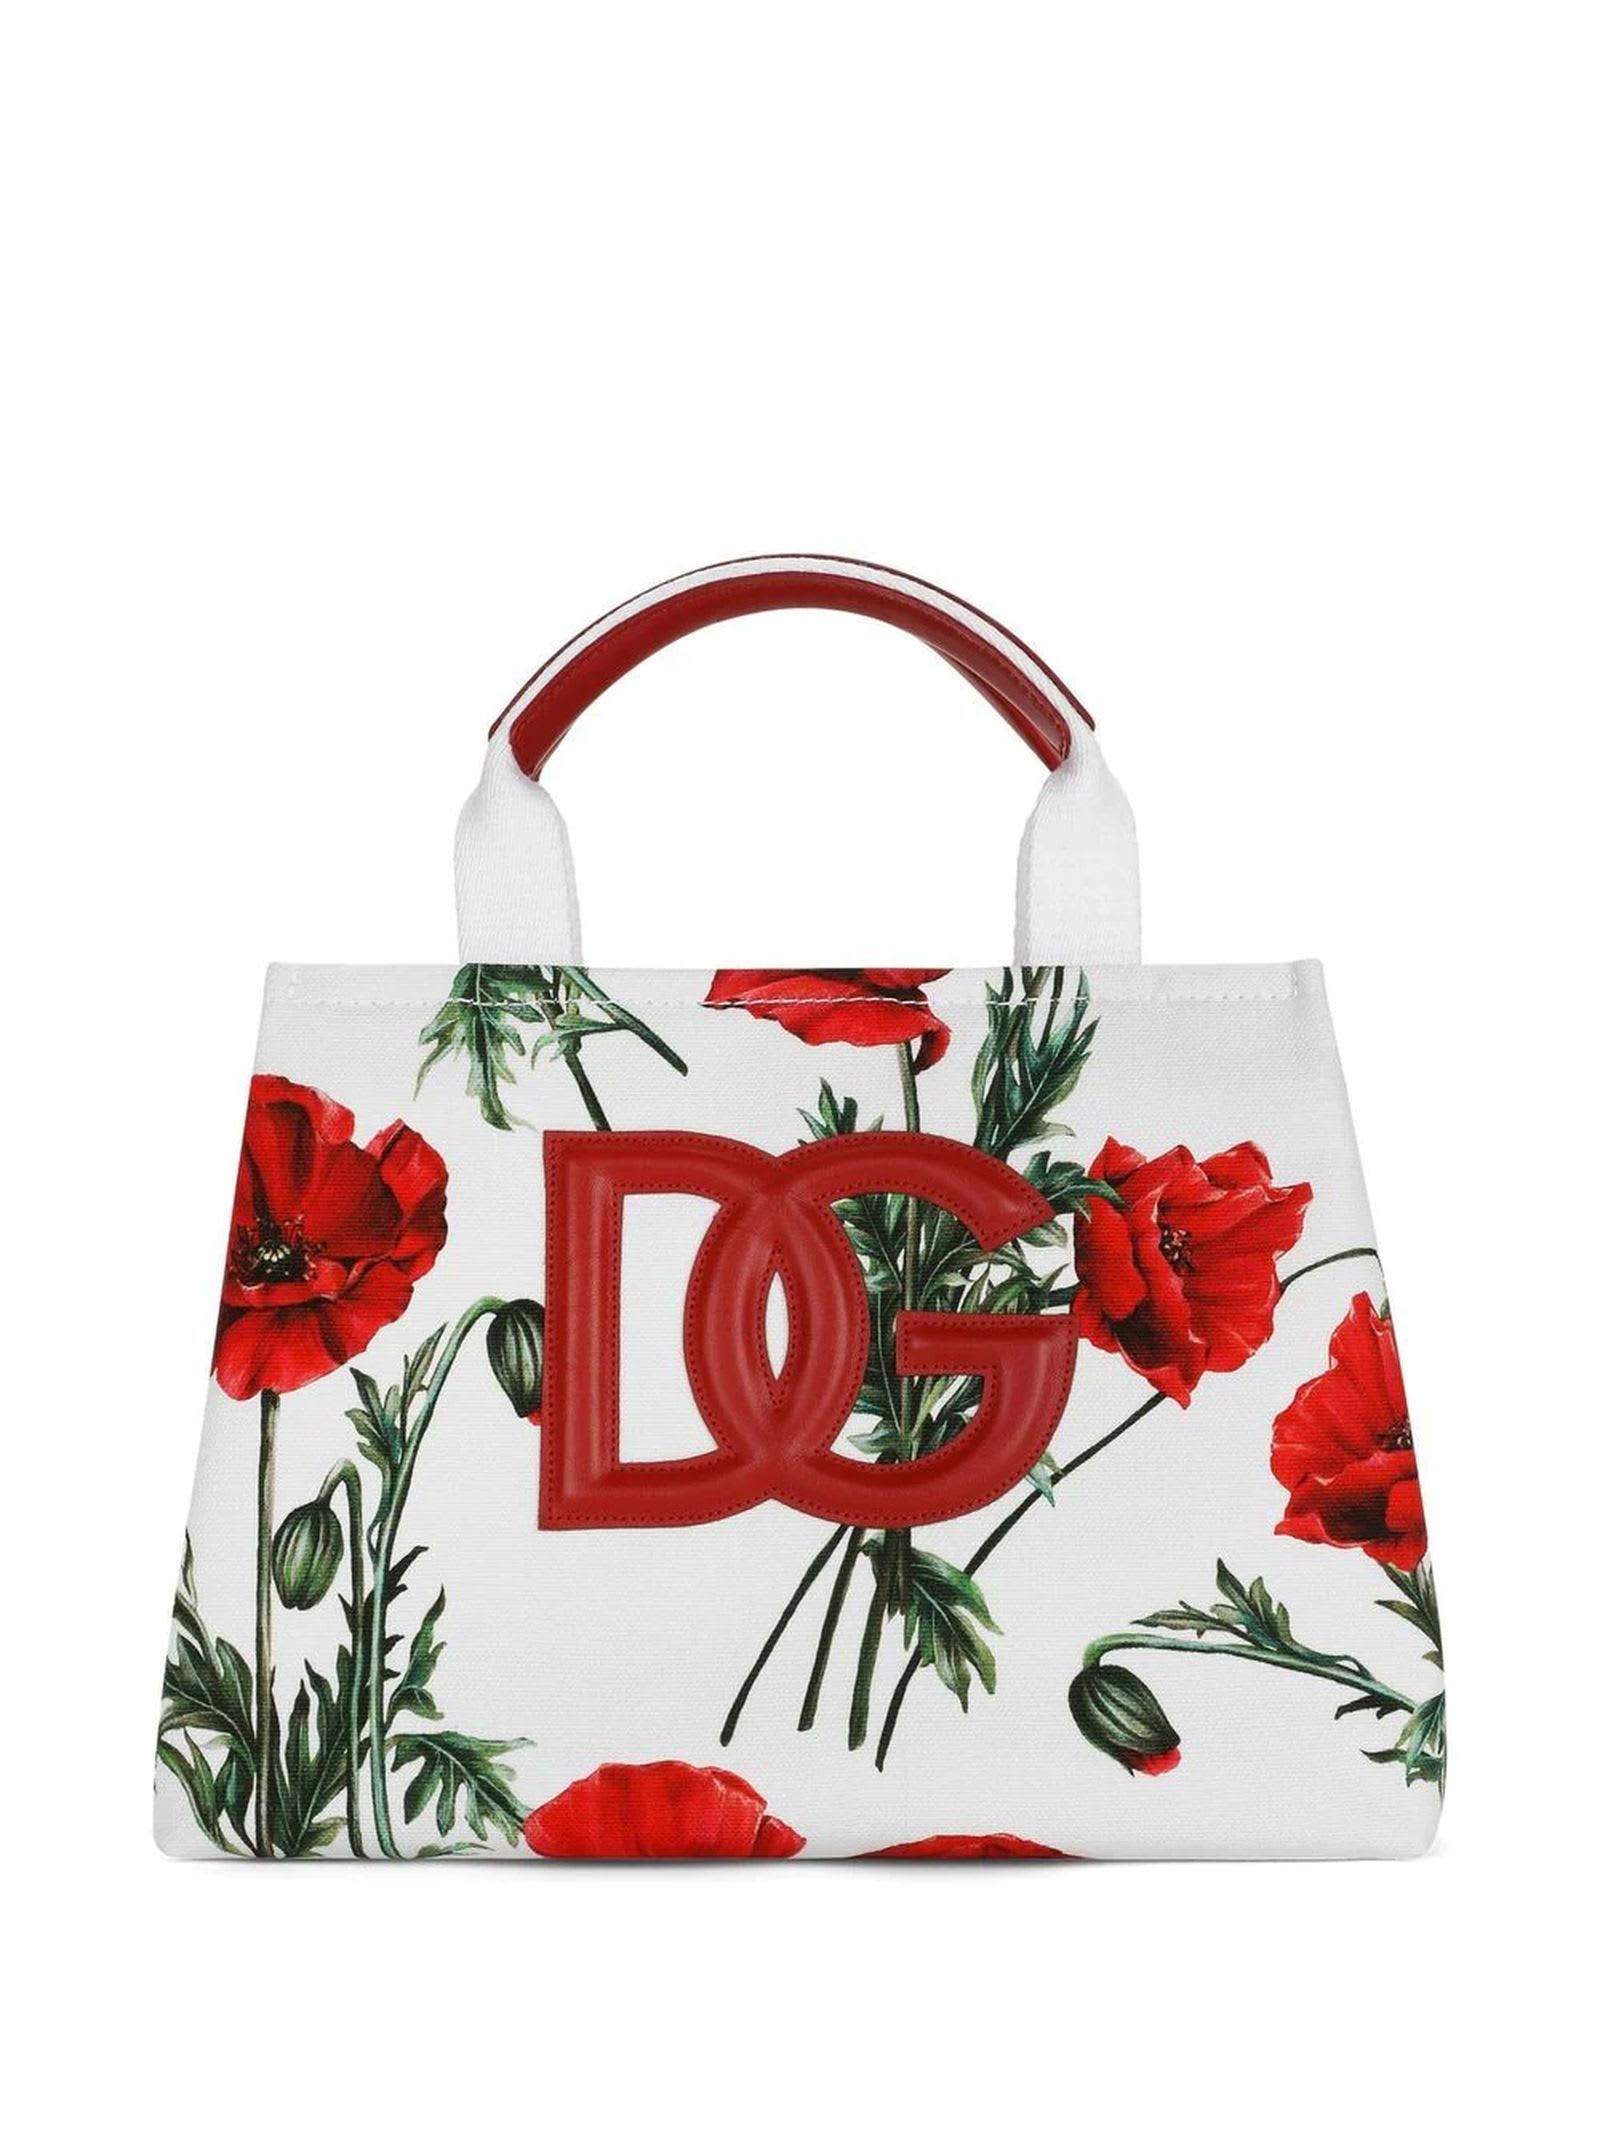 Dolce & Gabbana White Leather Bag